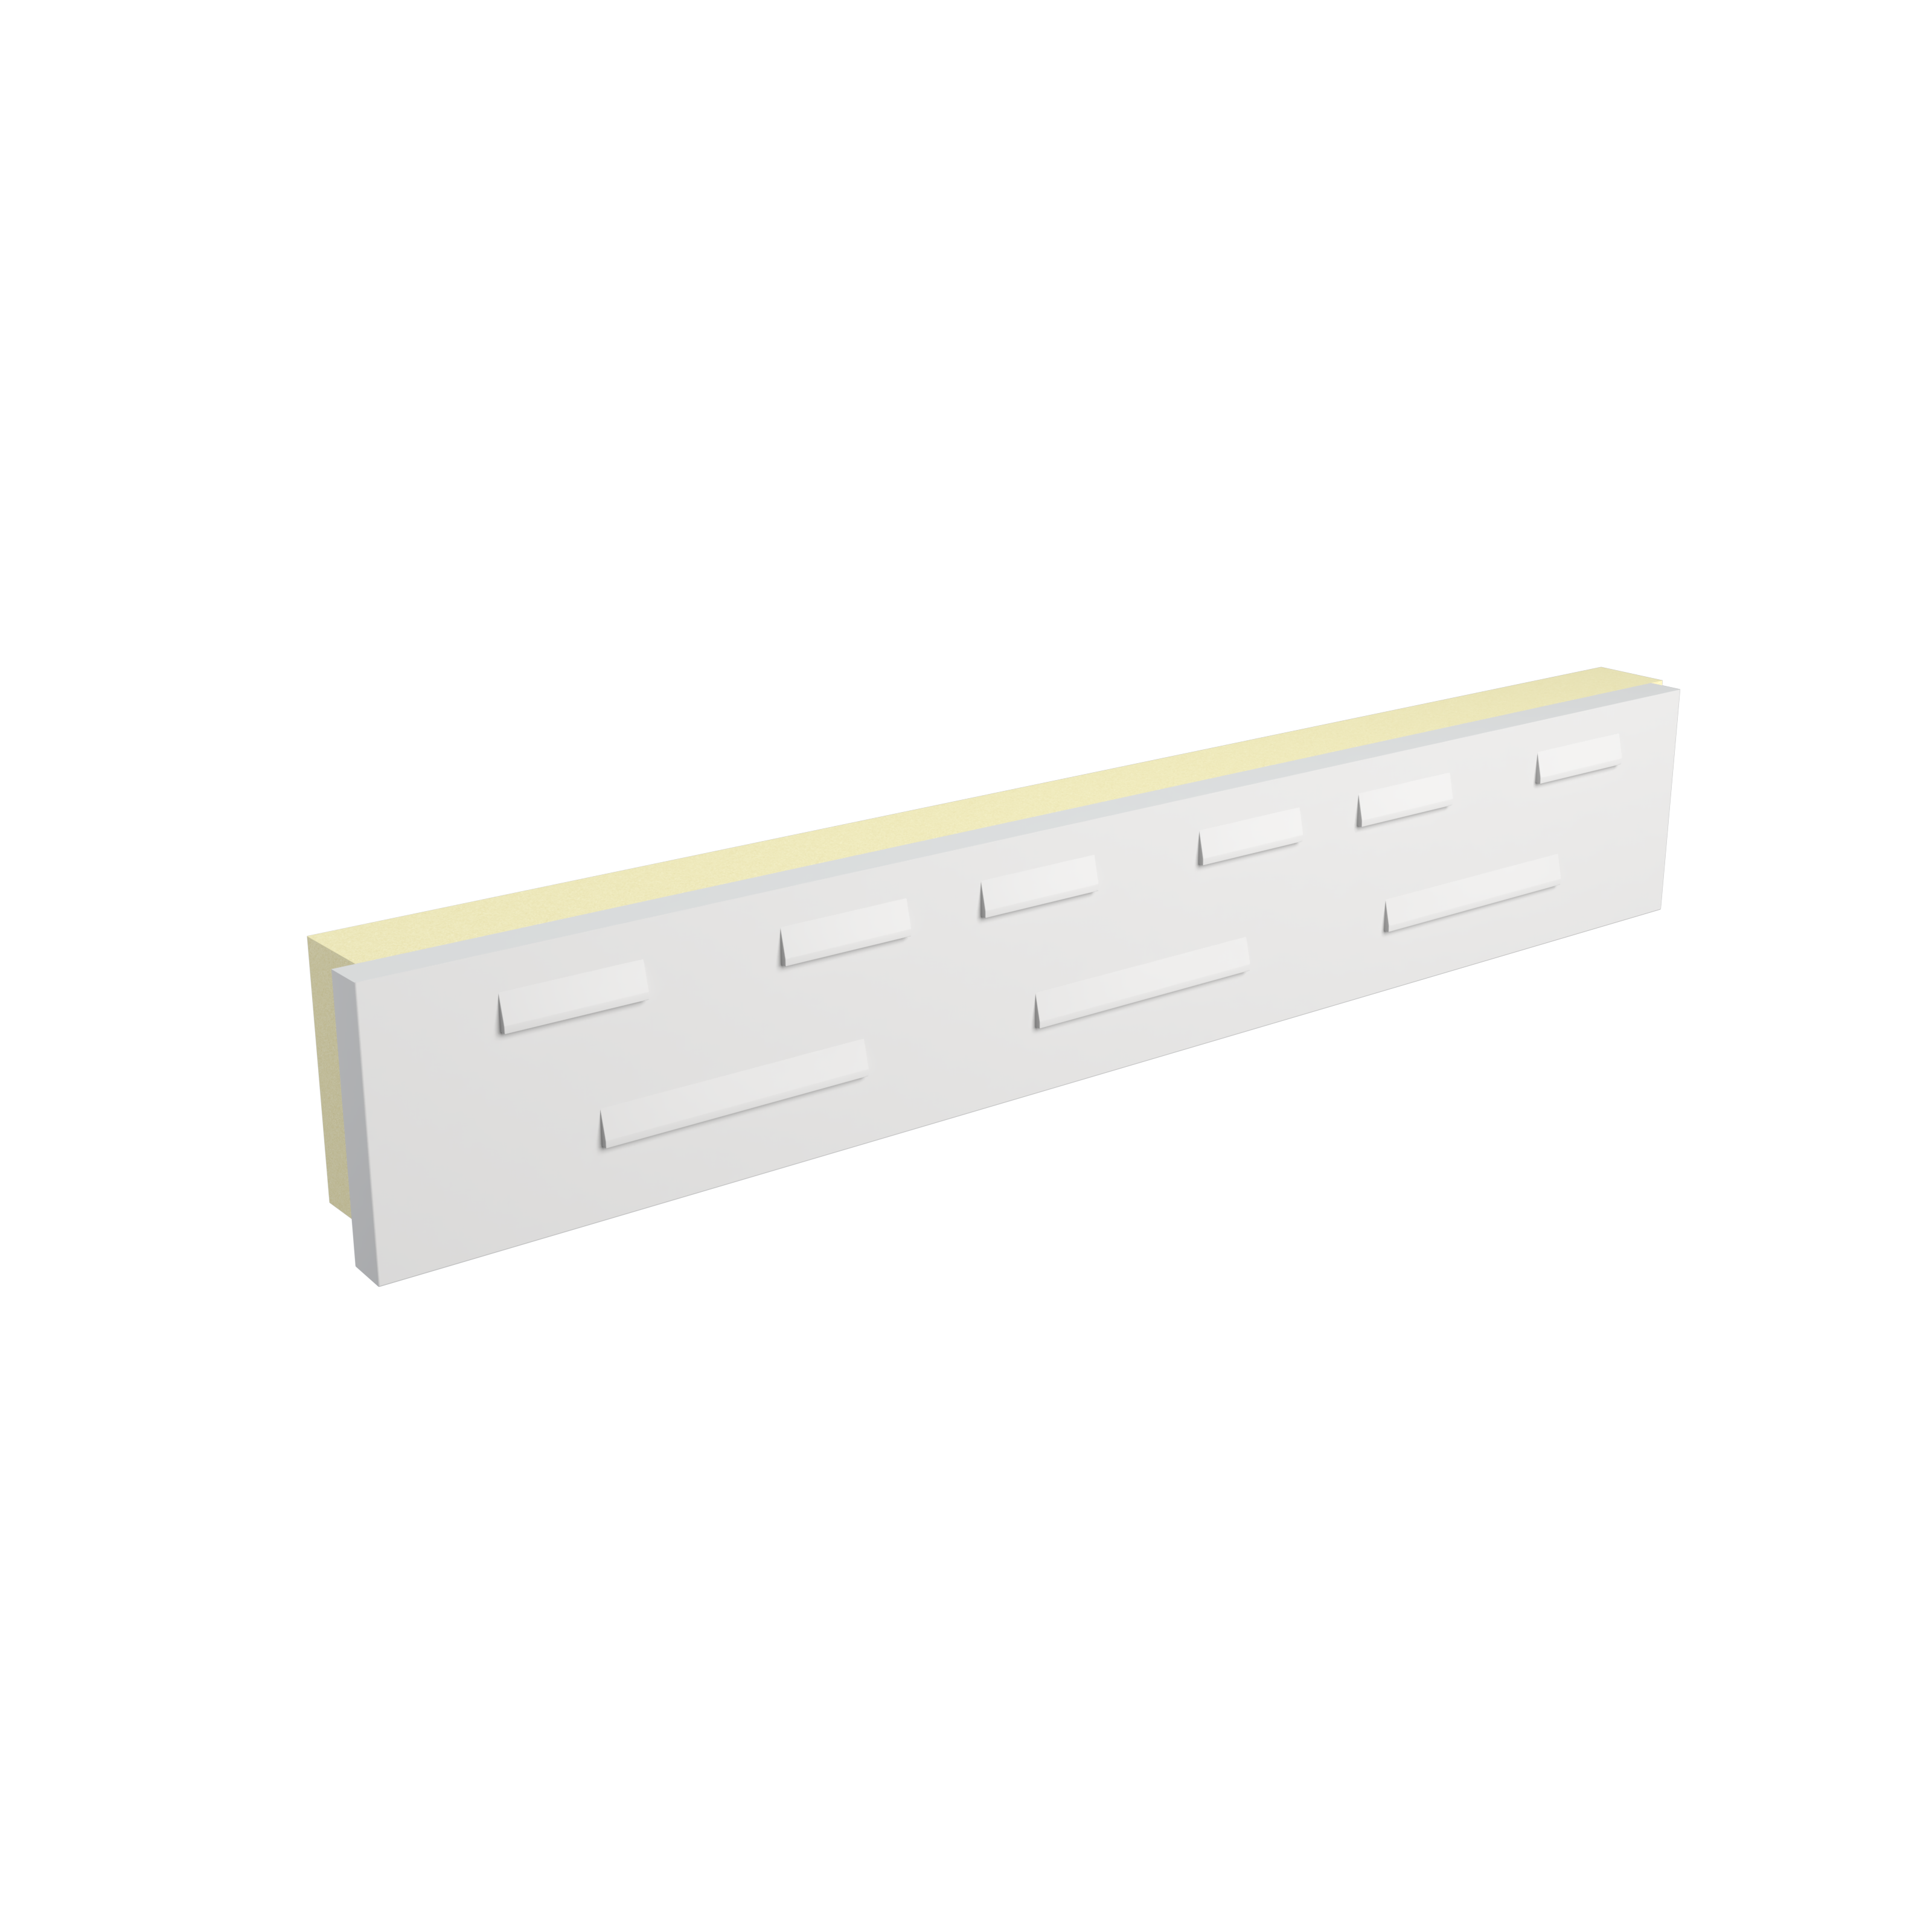 Unilin Insulation top cavity therm insulation board